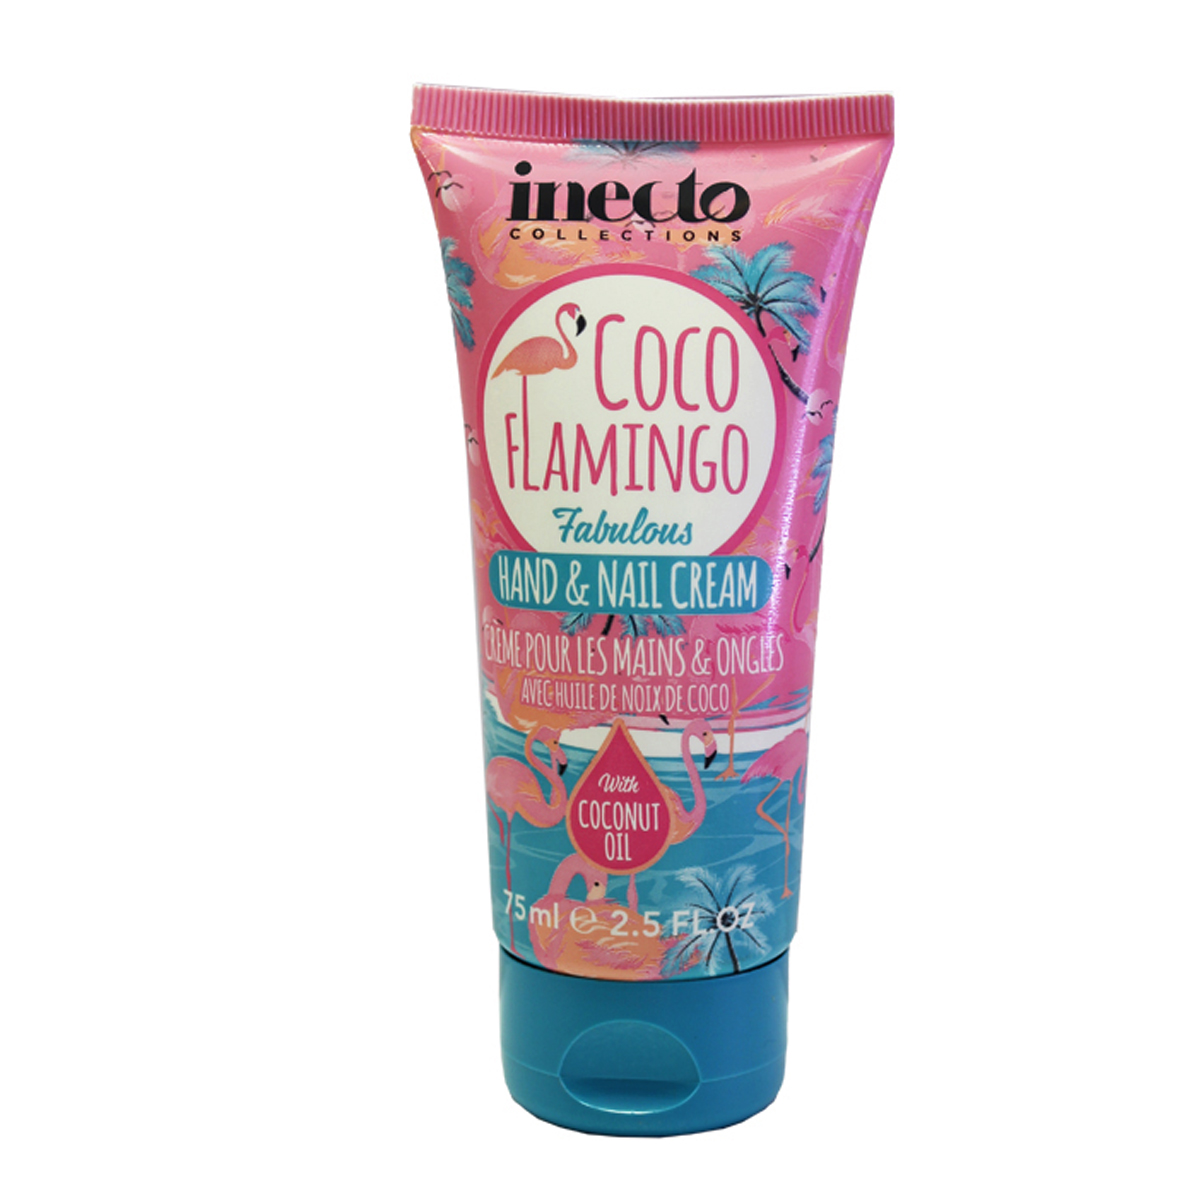 کرم آبرسان دست و ناخن کوکو فلامینگو~Hand & Nail Cream Coco Flamingo~INECTO